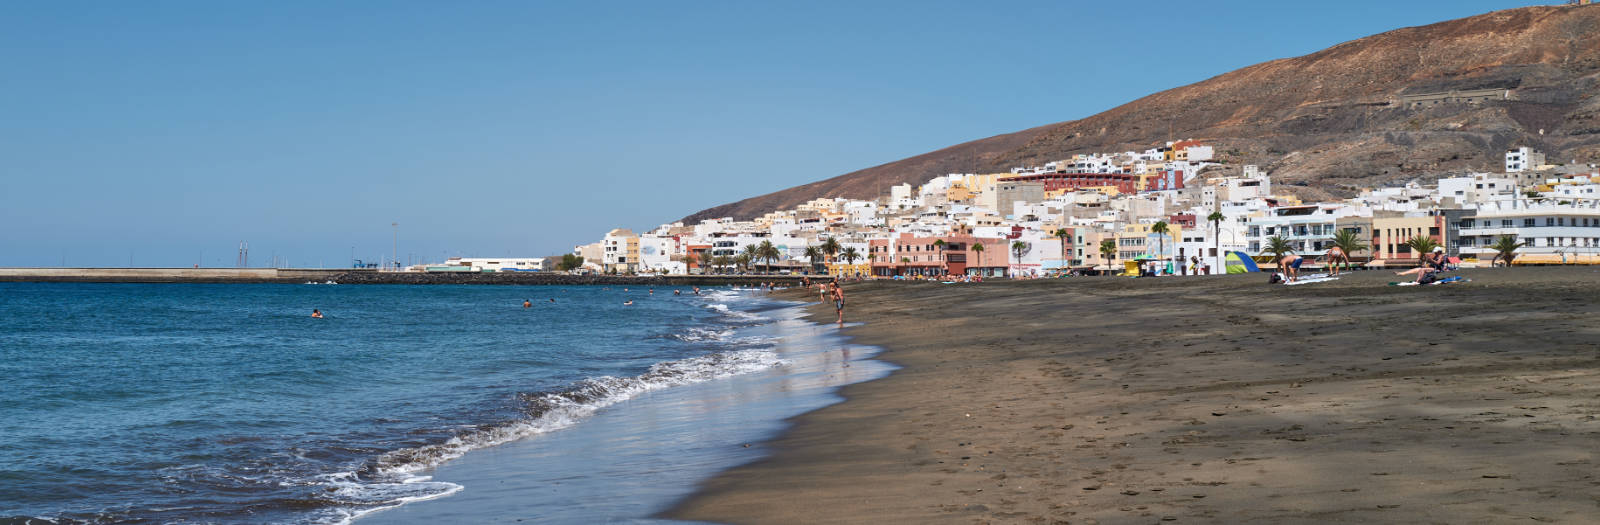 Die Stadt Gran Tarajal auf Fuerteventura.